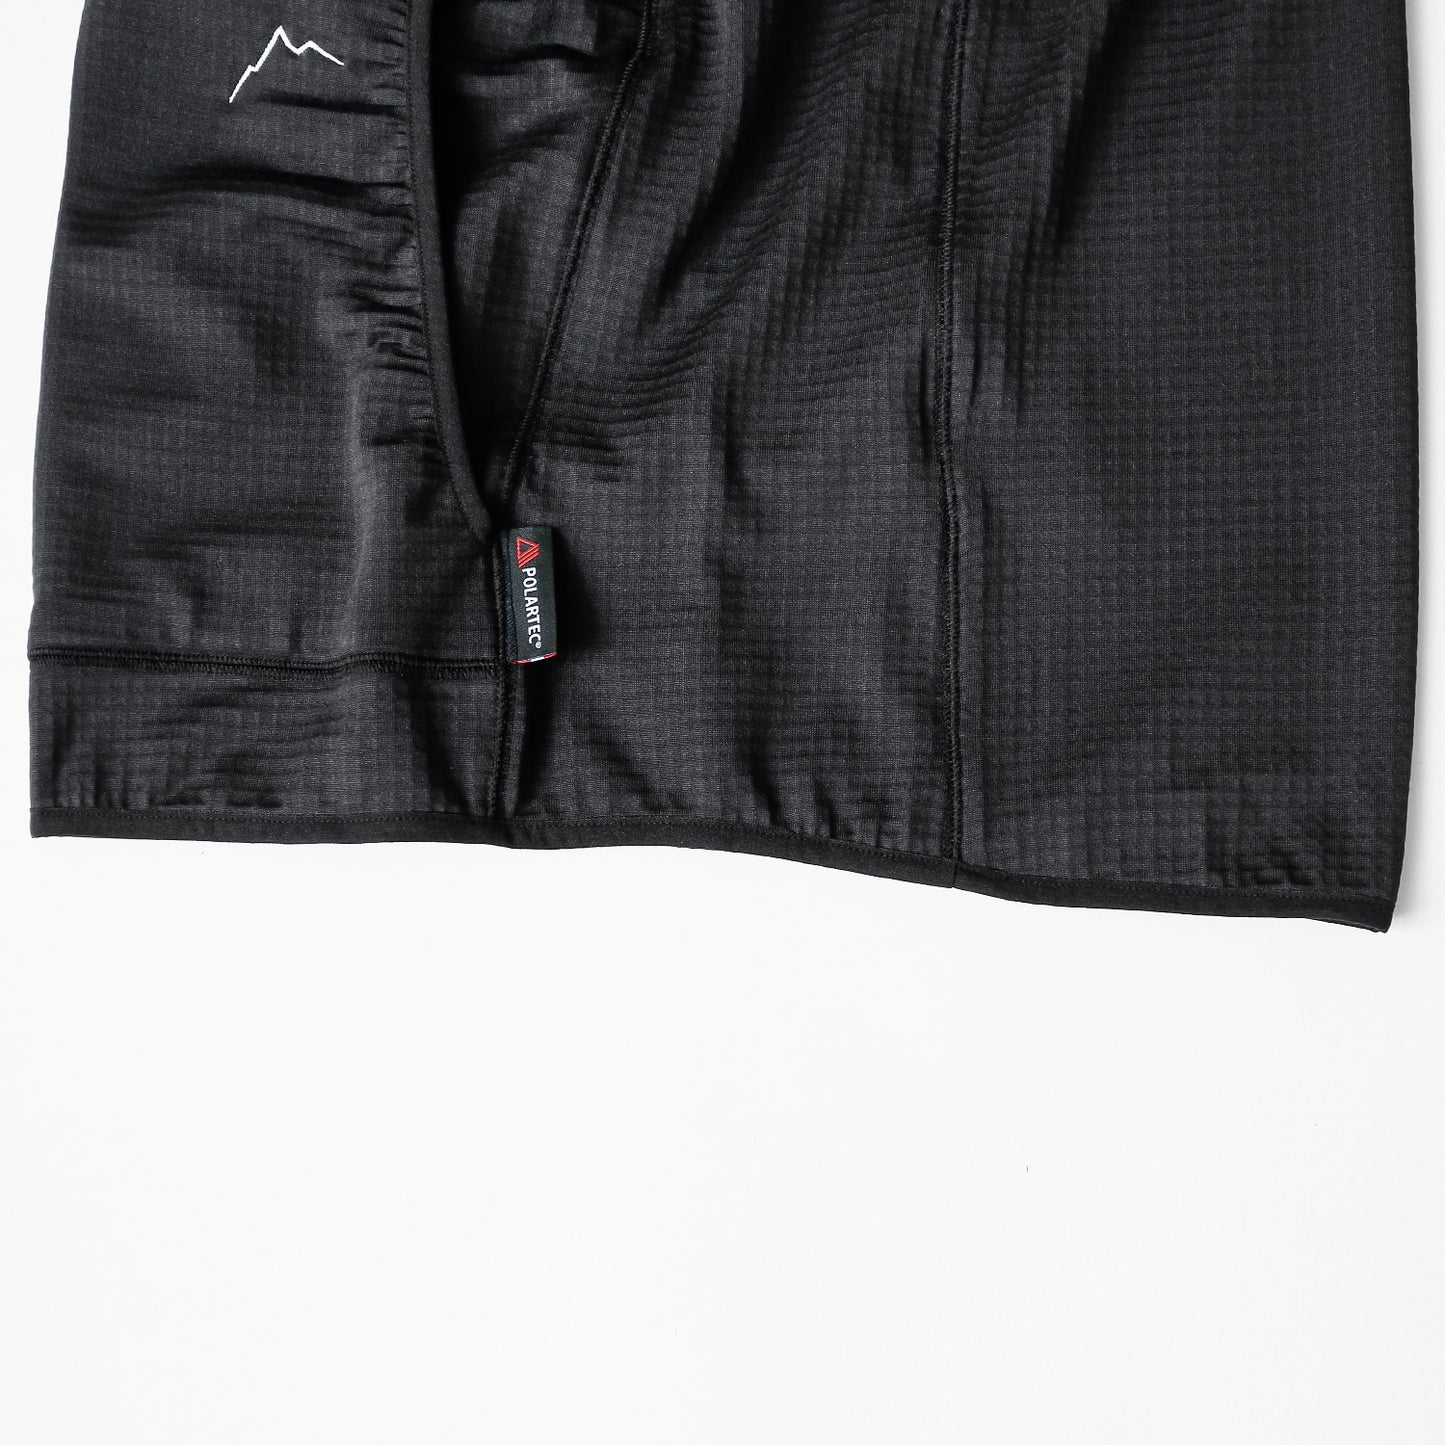 Cayl - Powergrid Vest (Black)